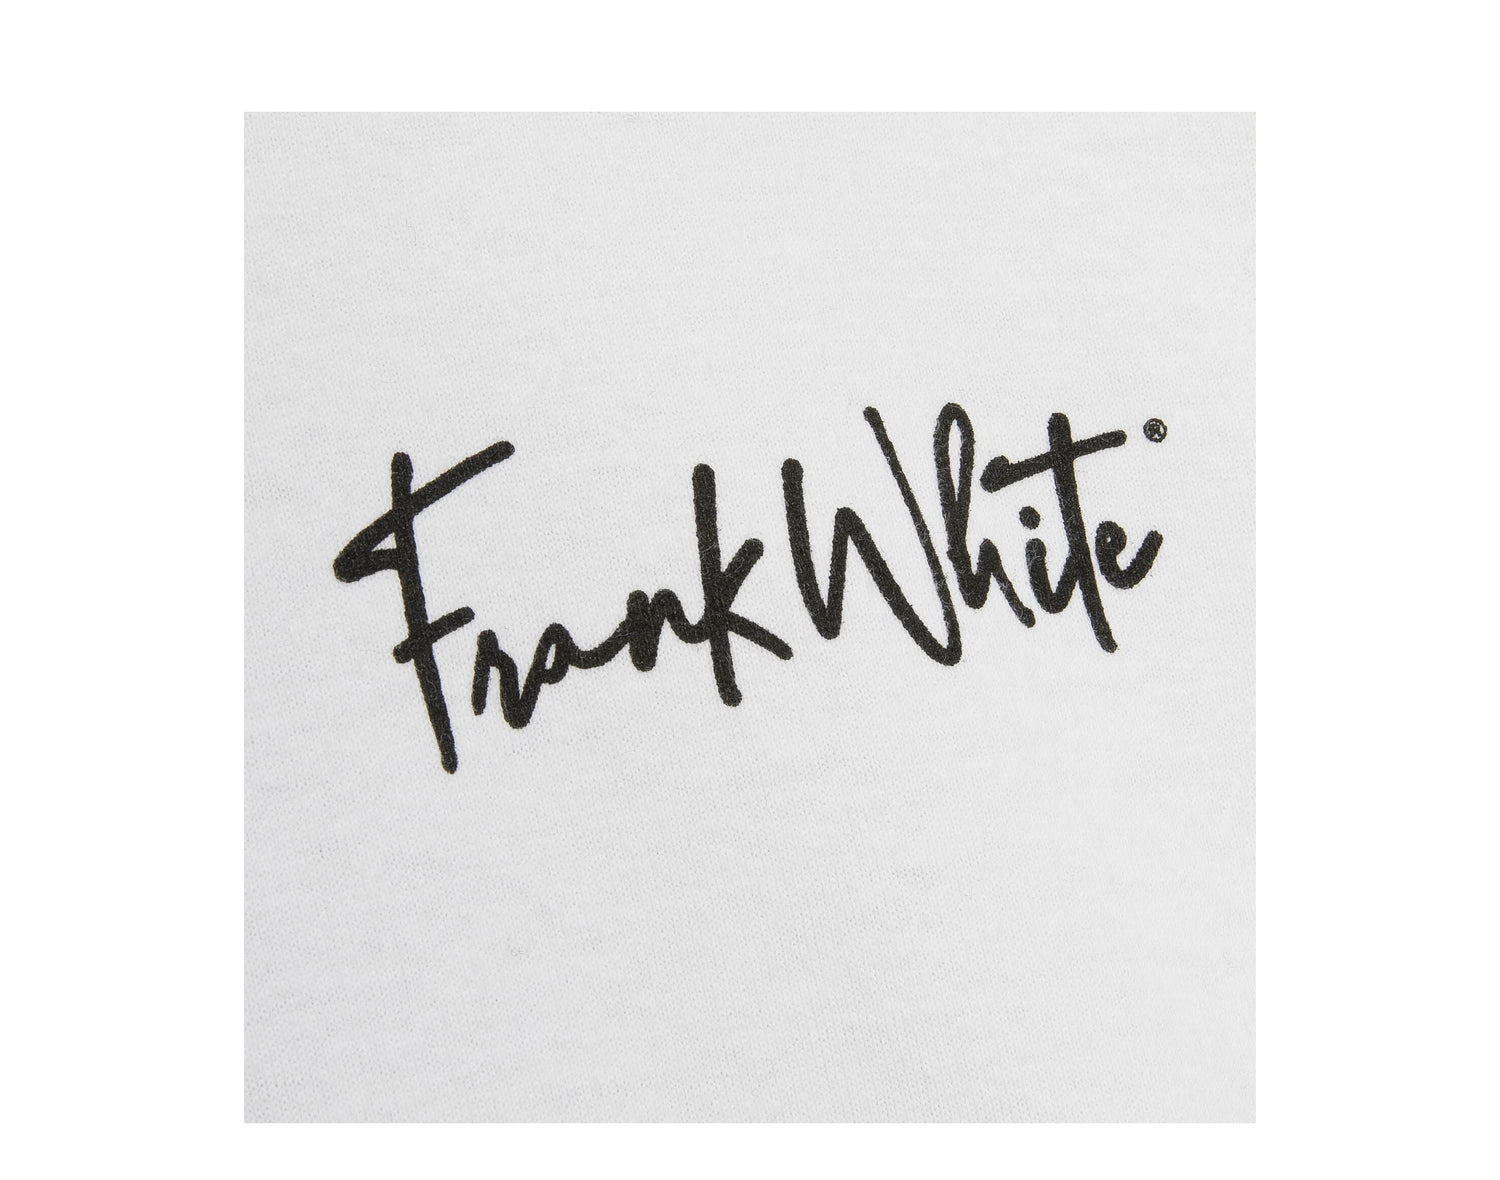 Mitchell & Ness x Frank White Legacy Reborn Men's T-Shirt